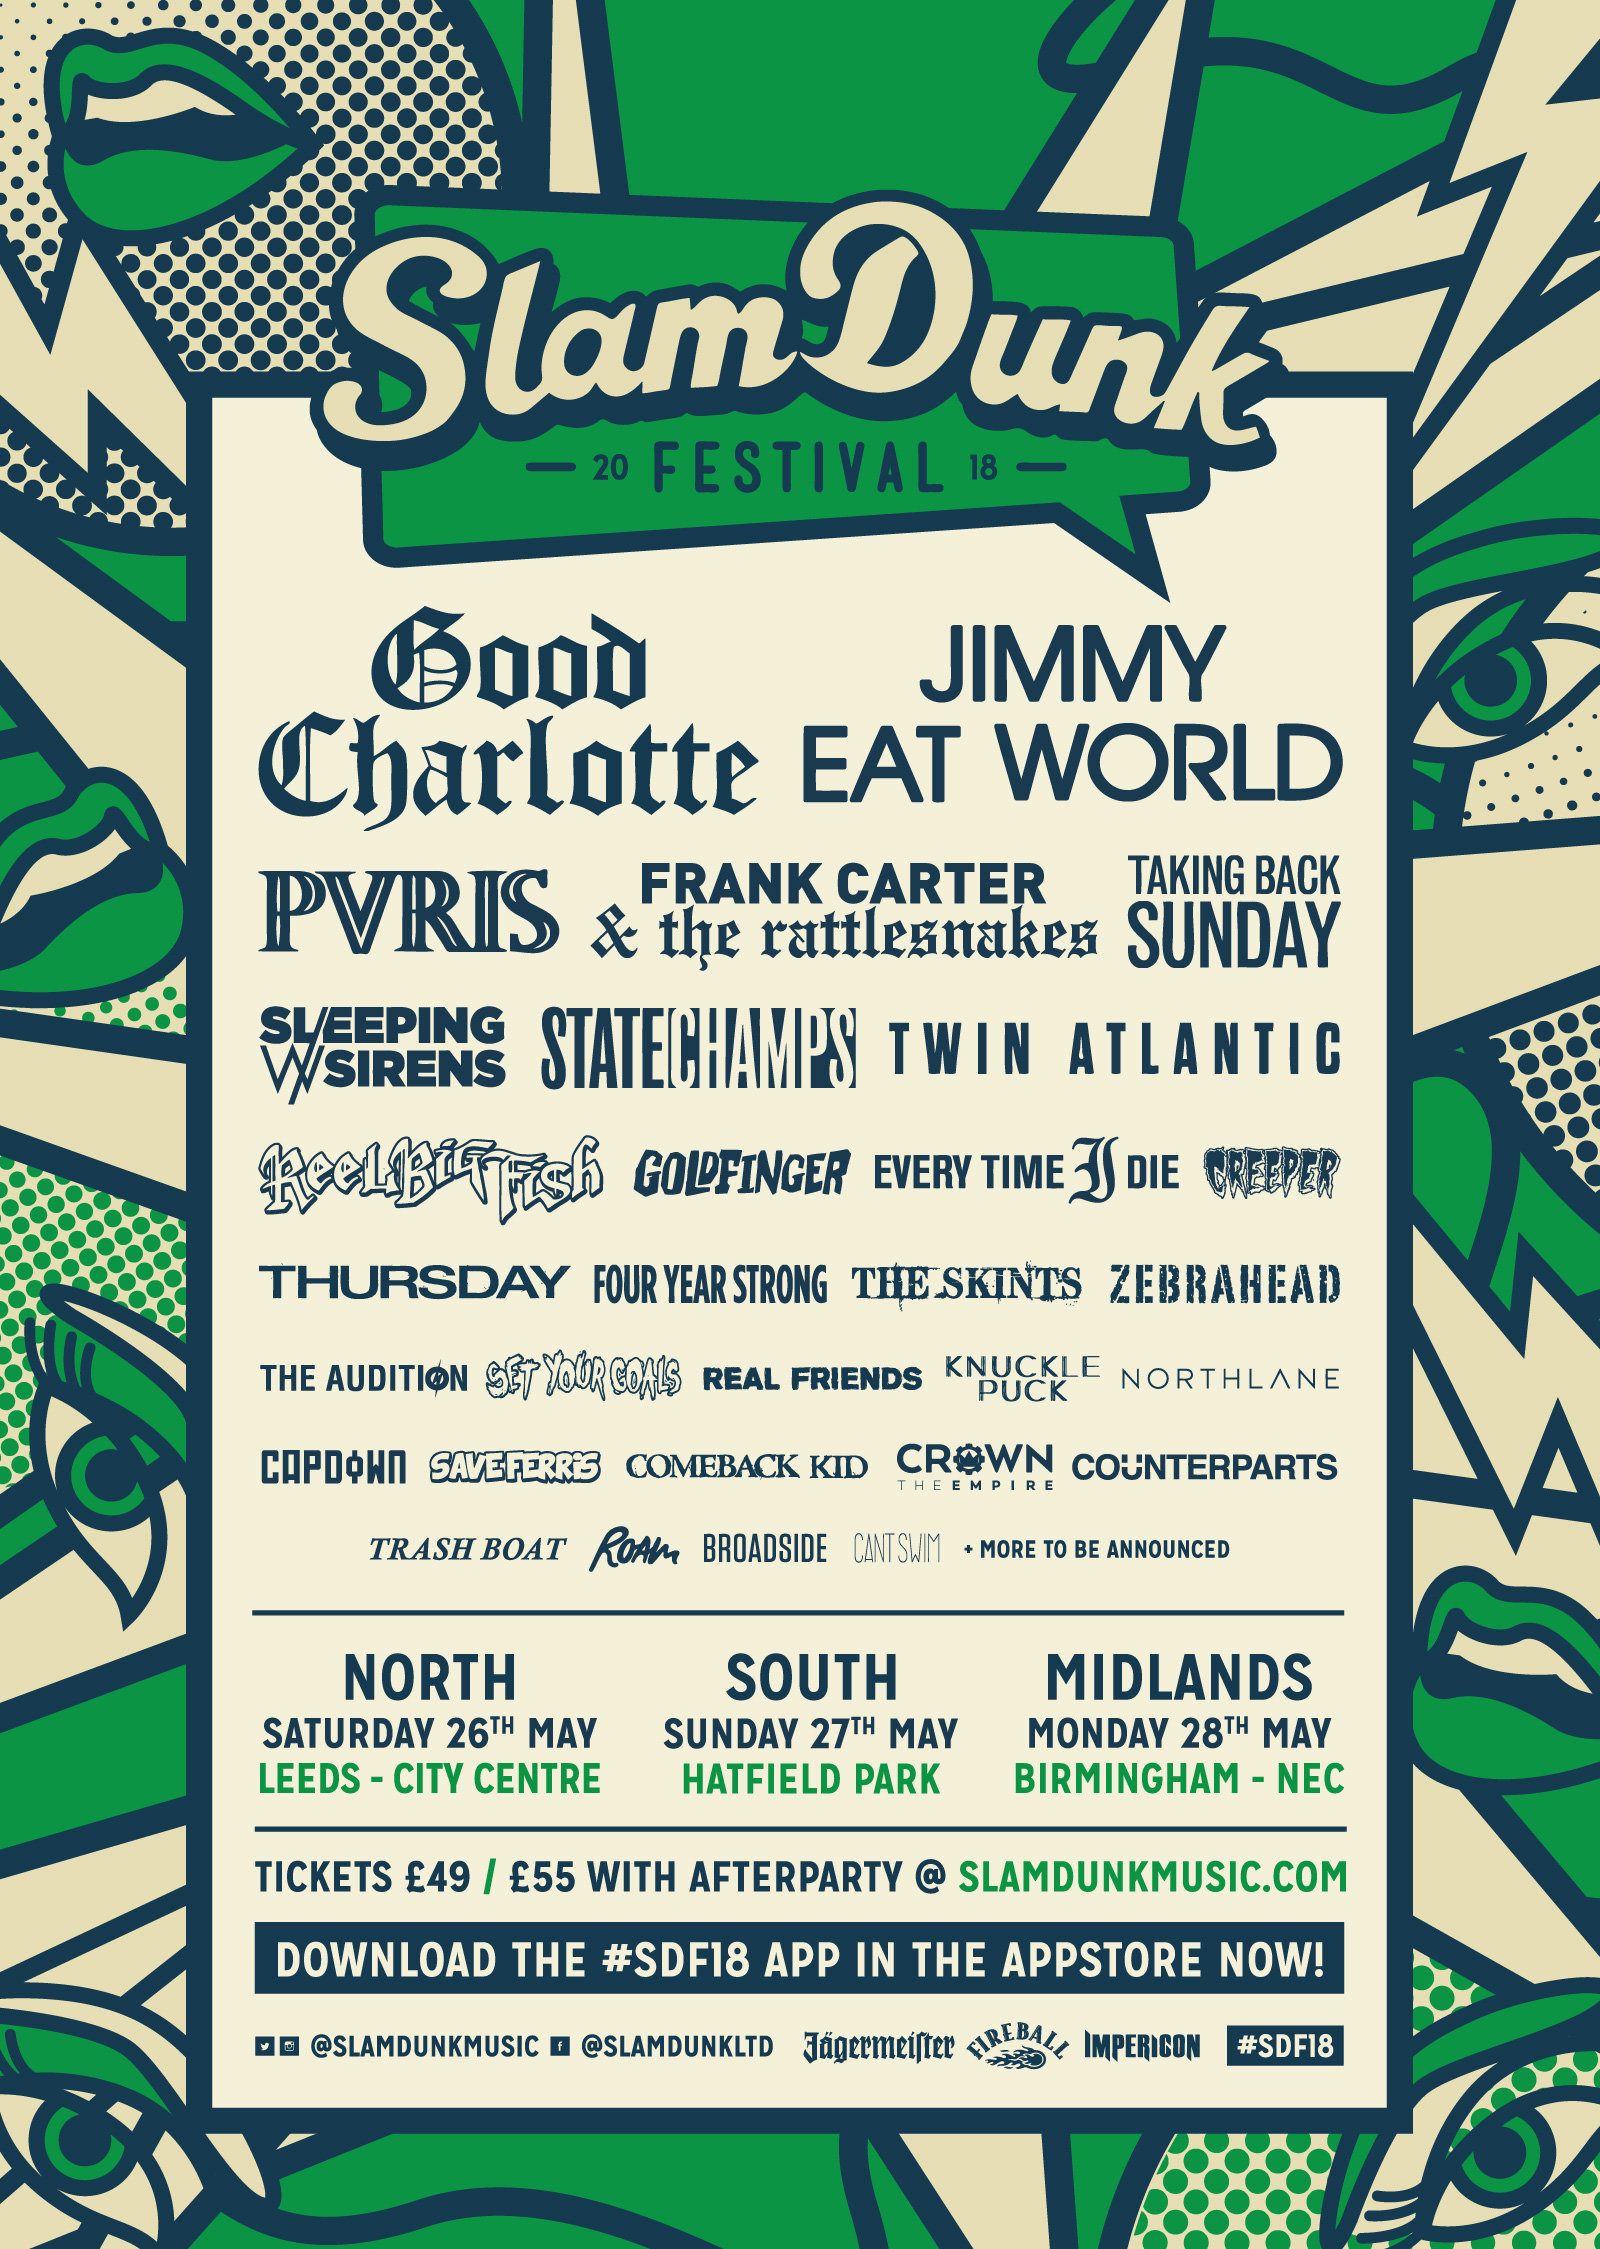 Slam Dunk Festival Confirms The Audition